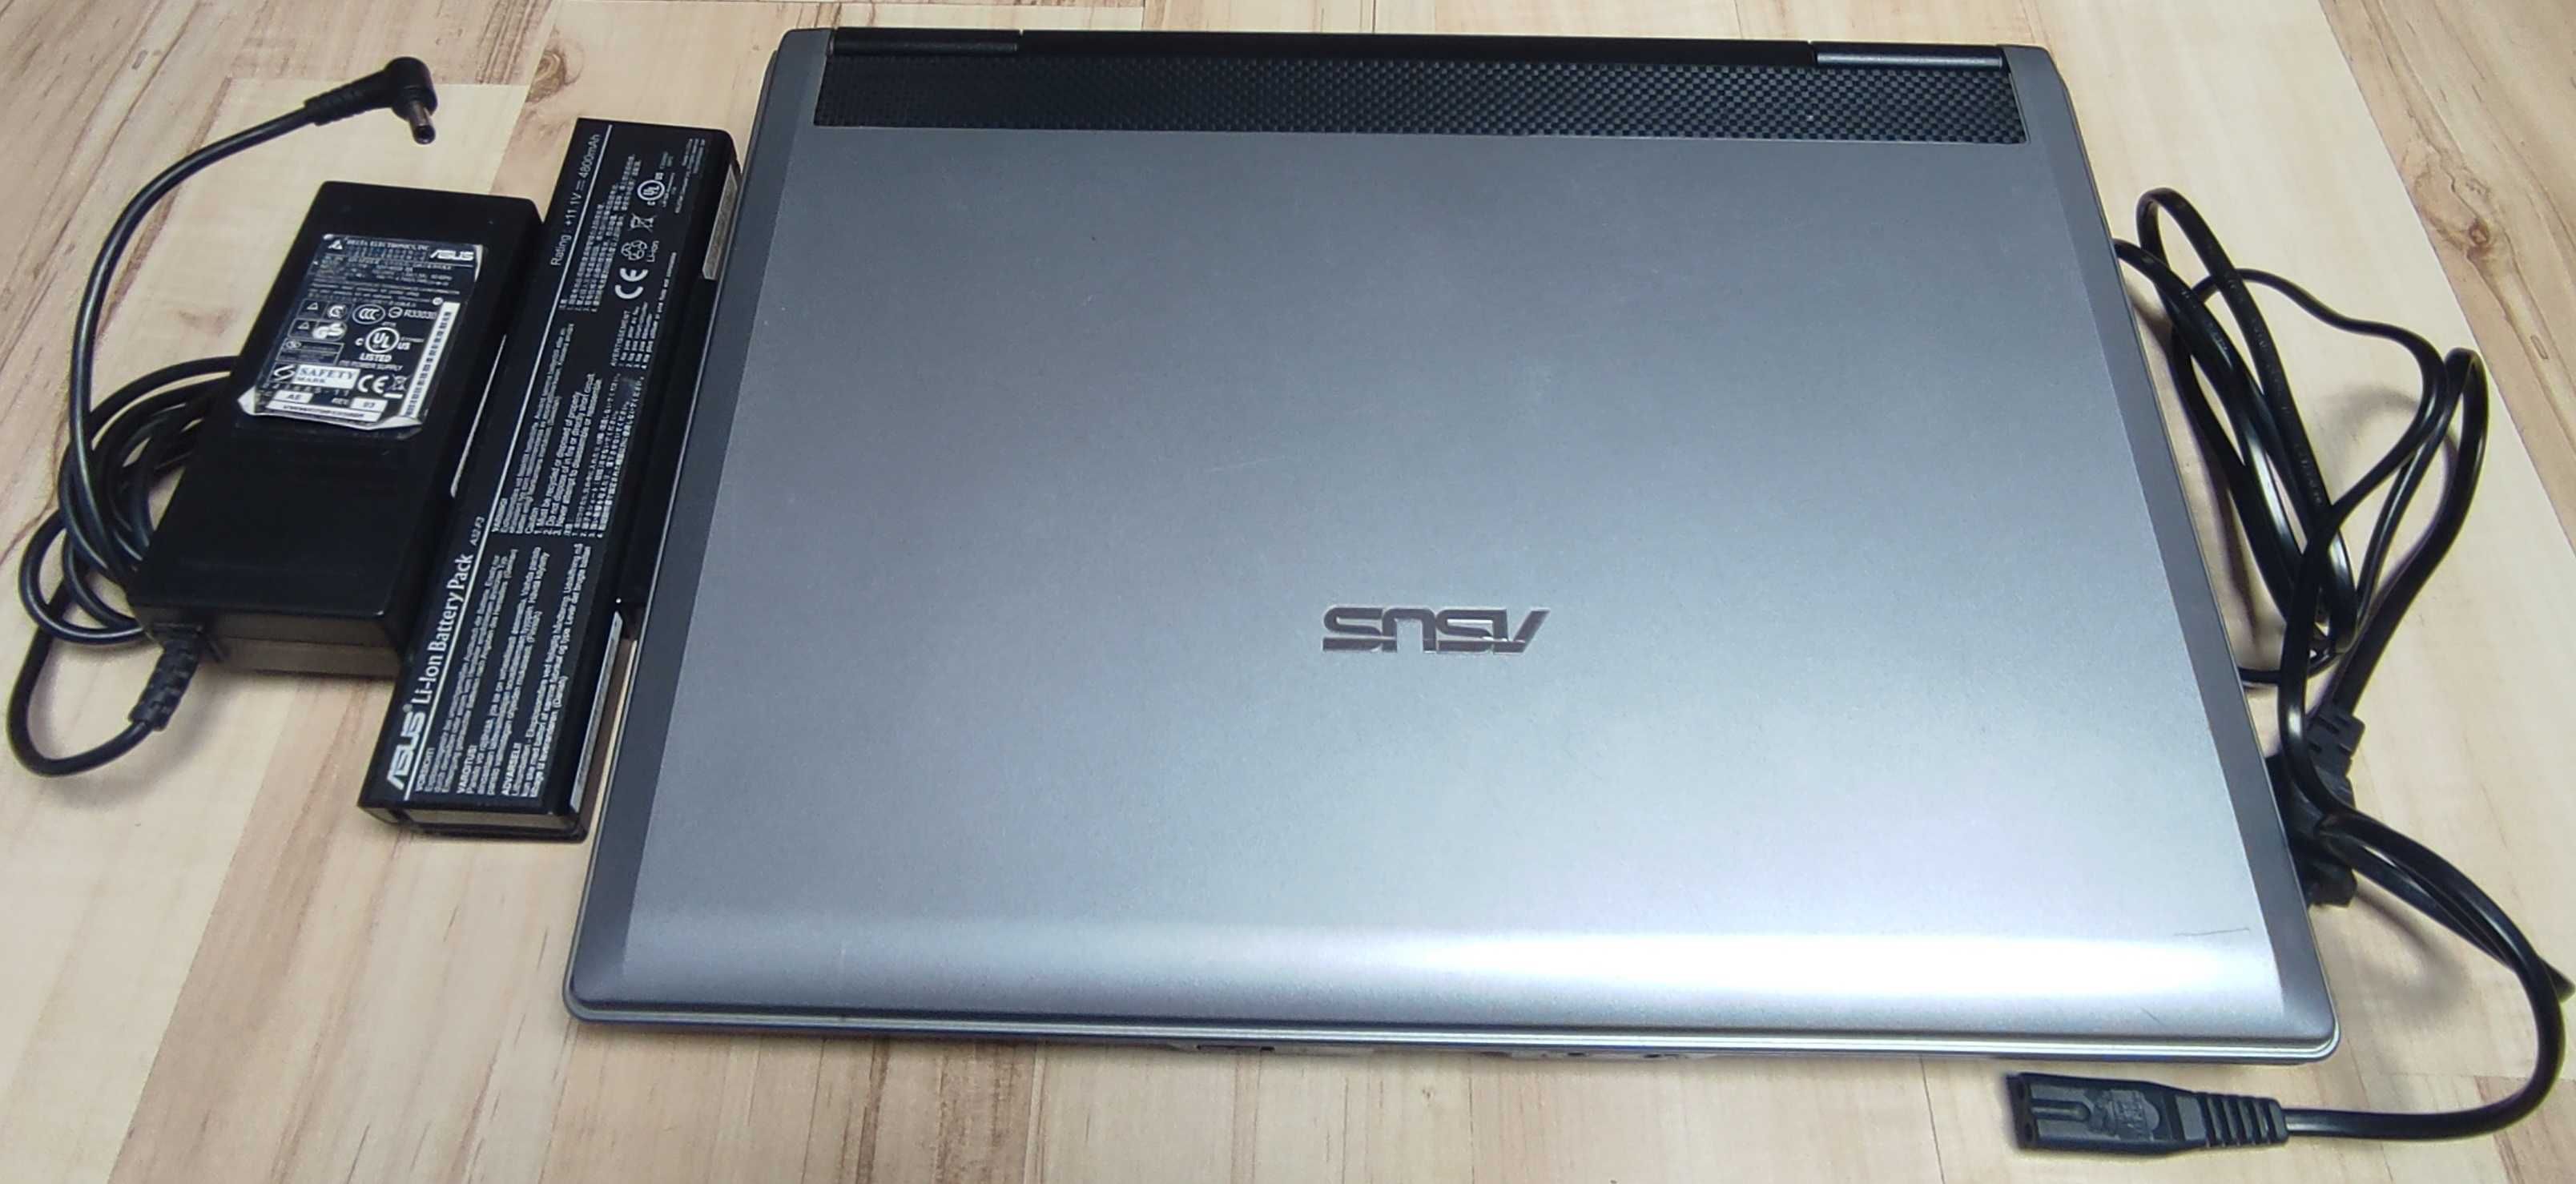 Laptop Asus F3J Core 2 Duo